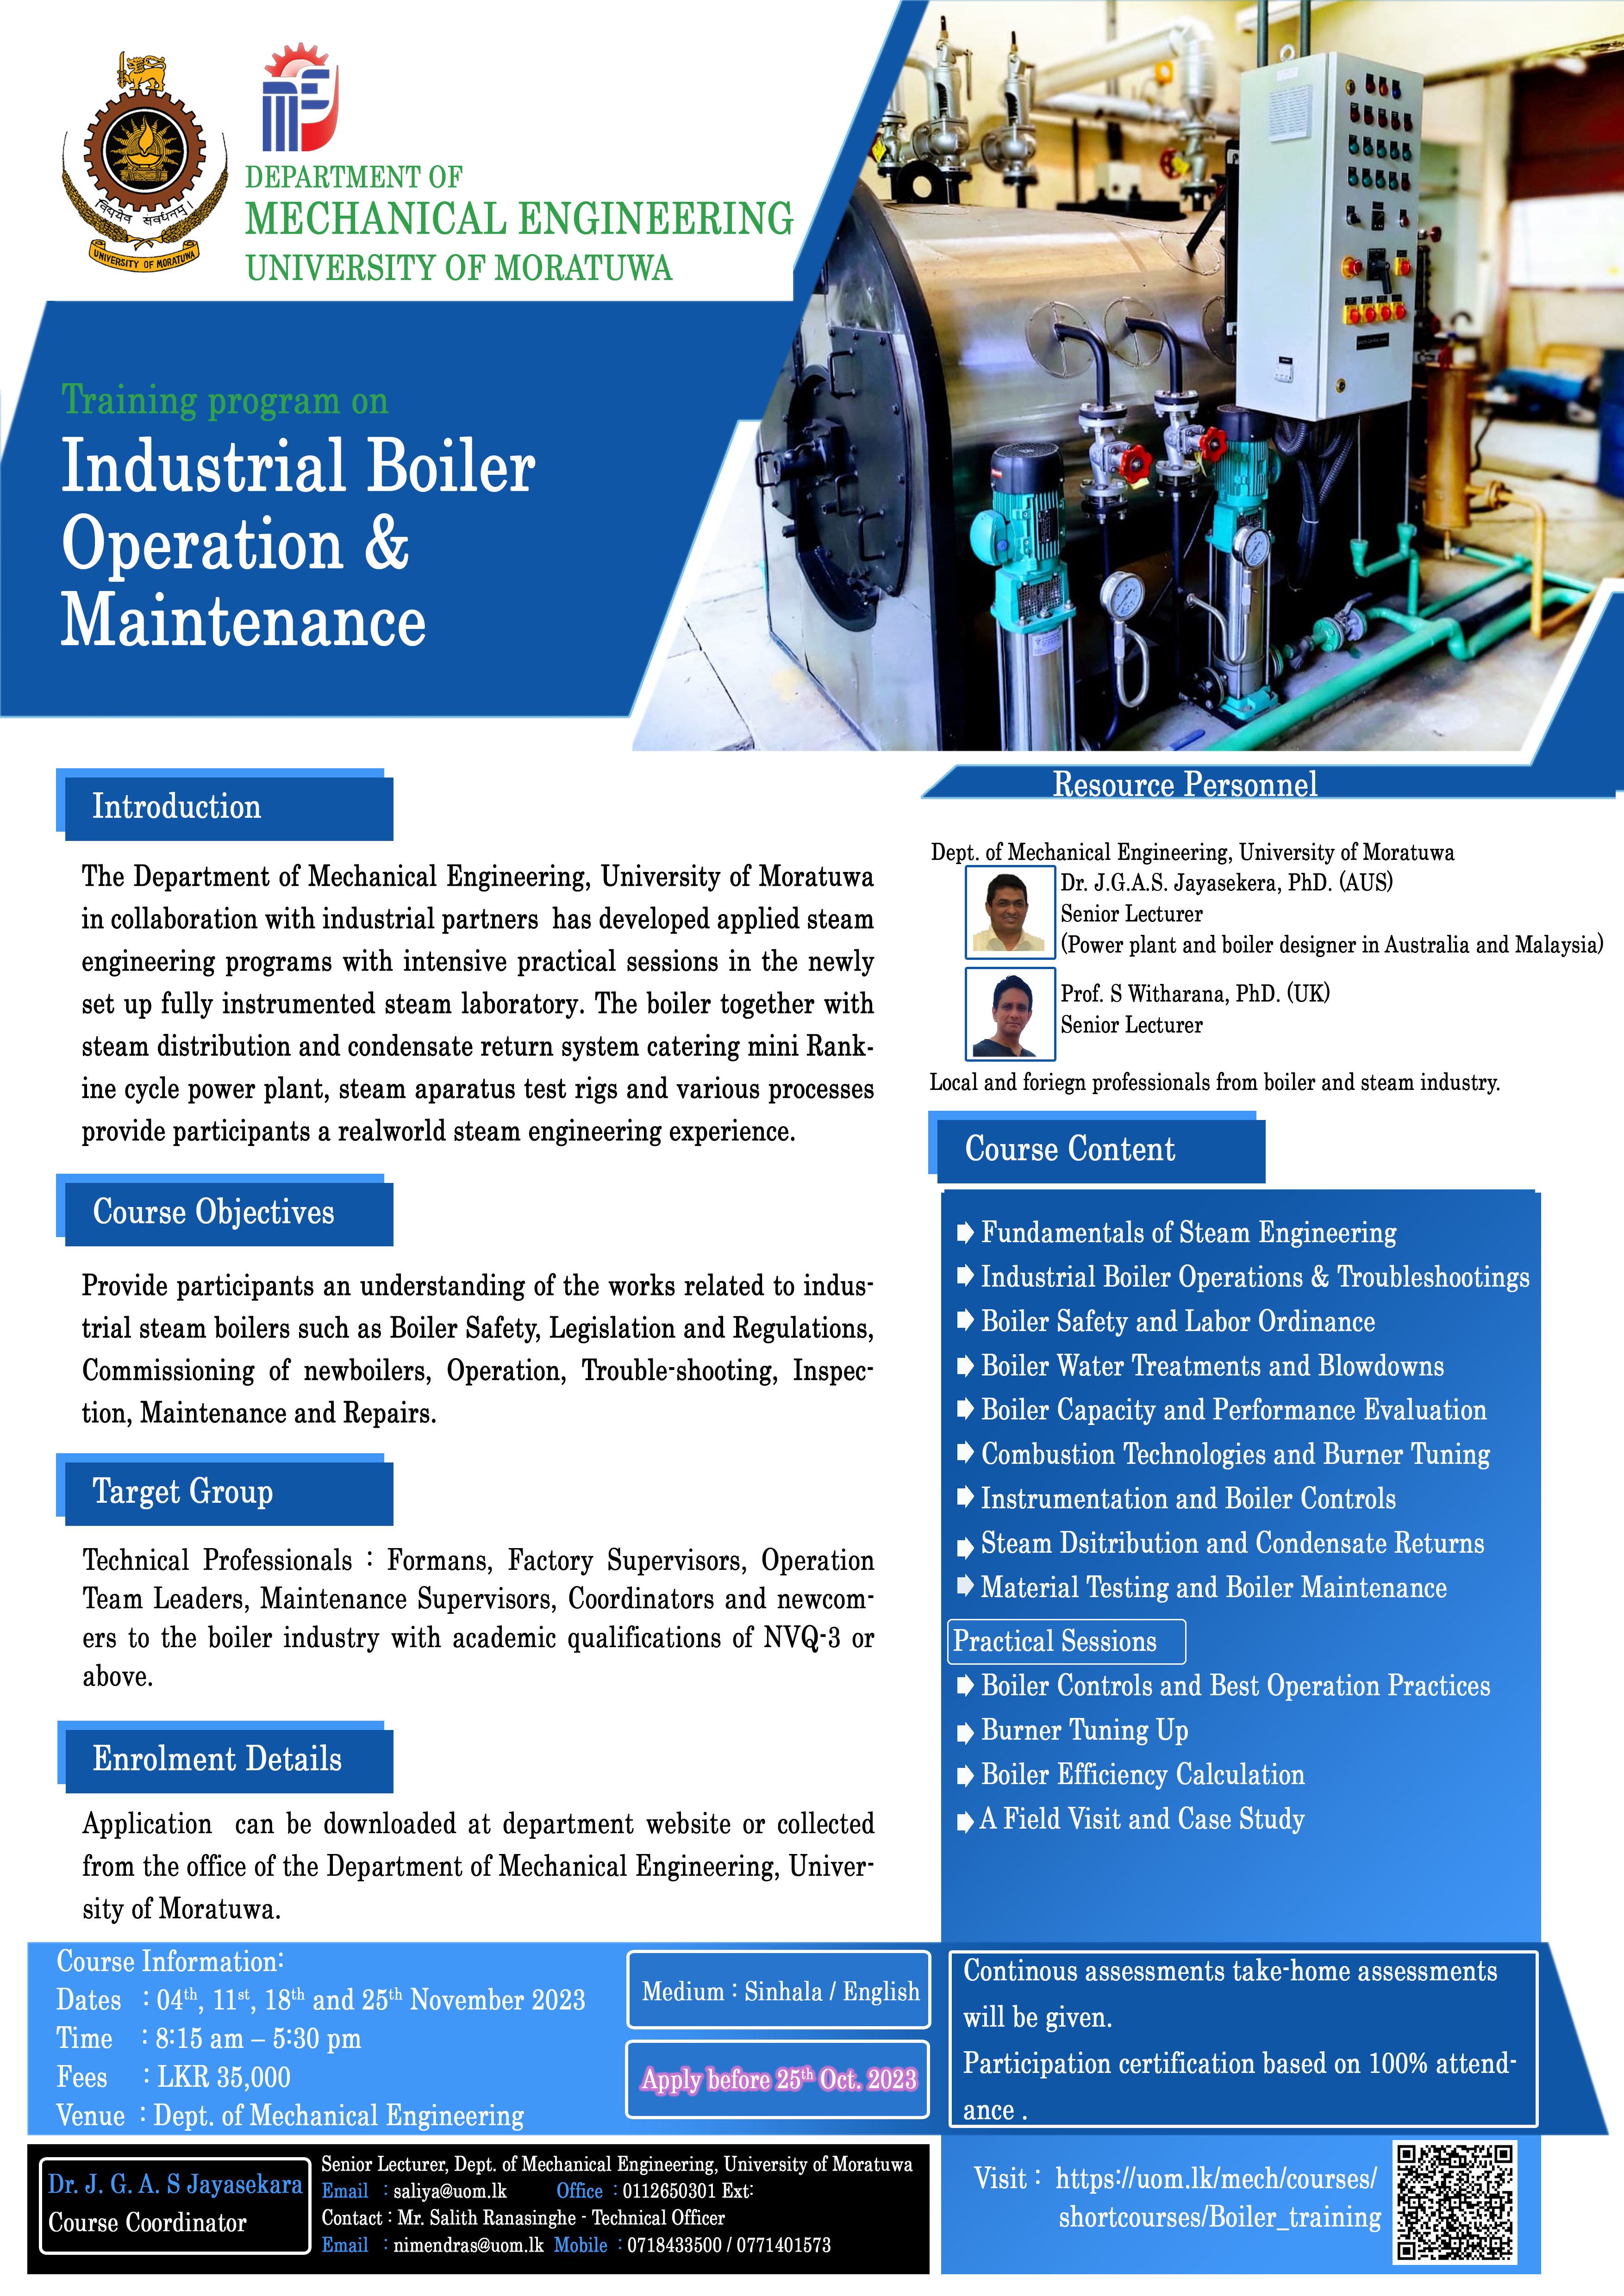 Training program on Industrial Boiler Operation and Maintenance